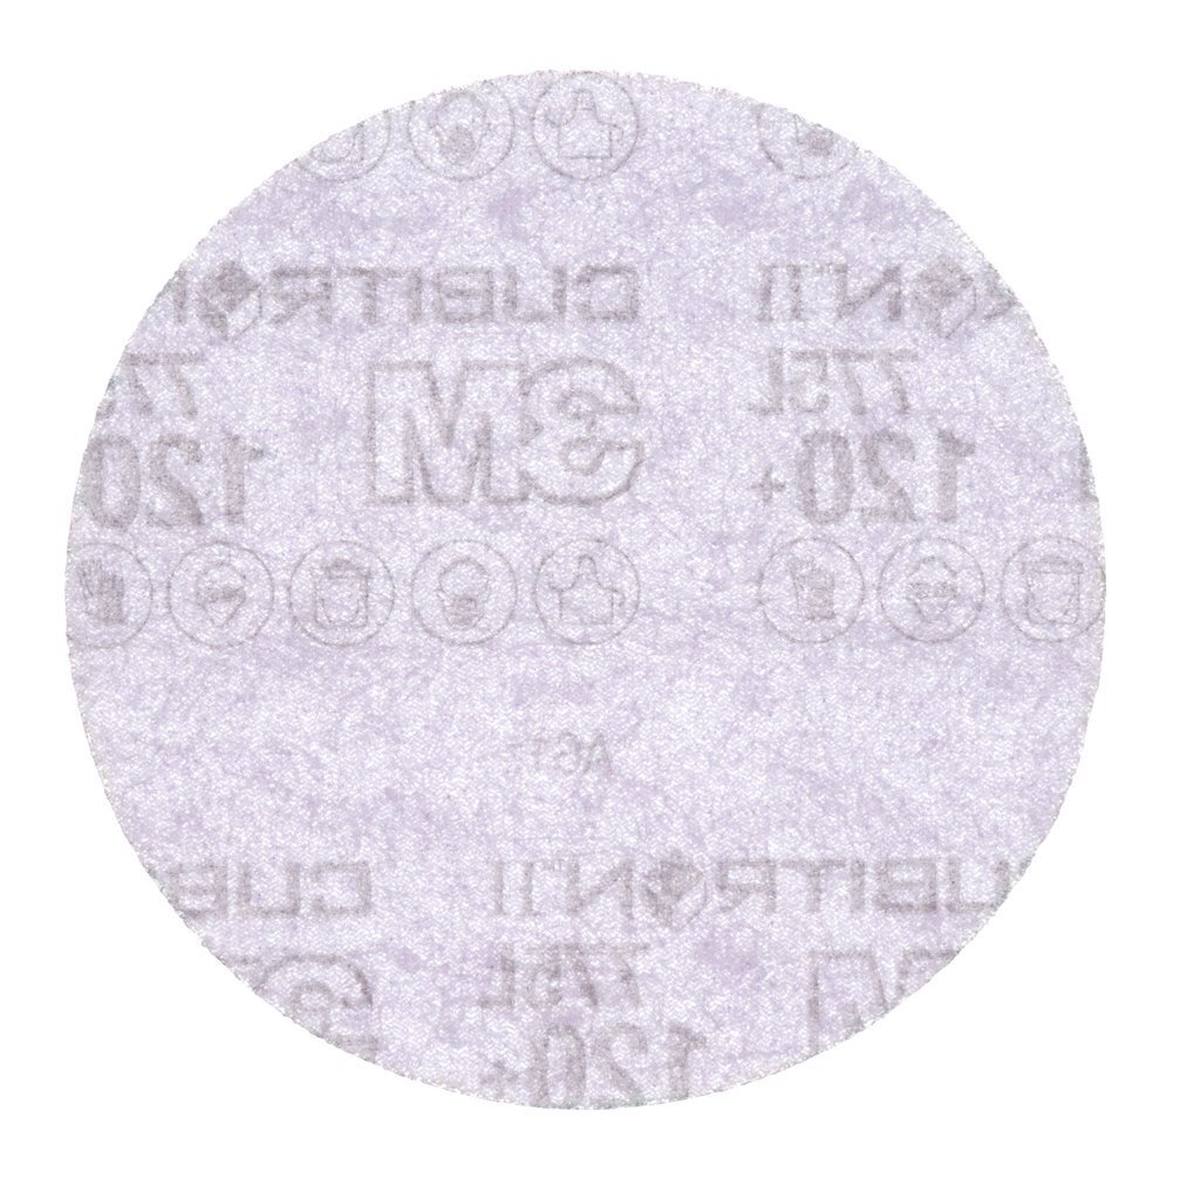 3M Cubitron II Hookit film disc 775L, 125 mm, 120+, unperforated #86819